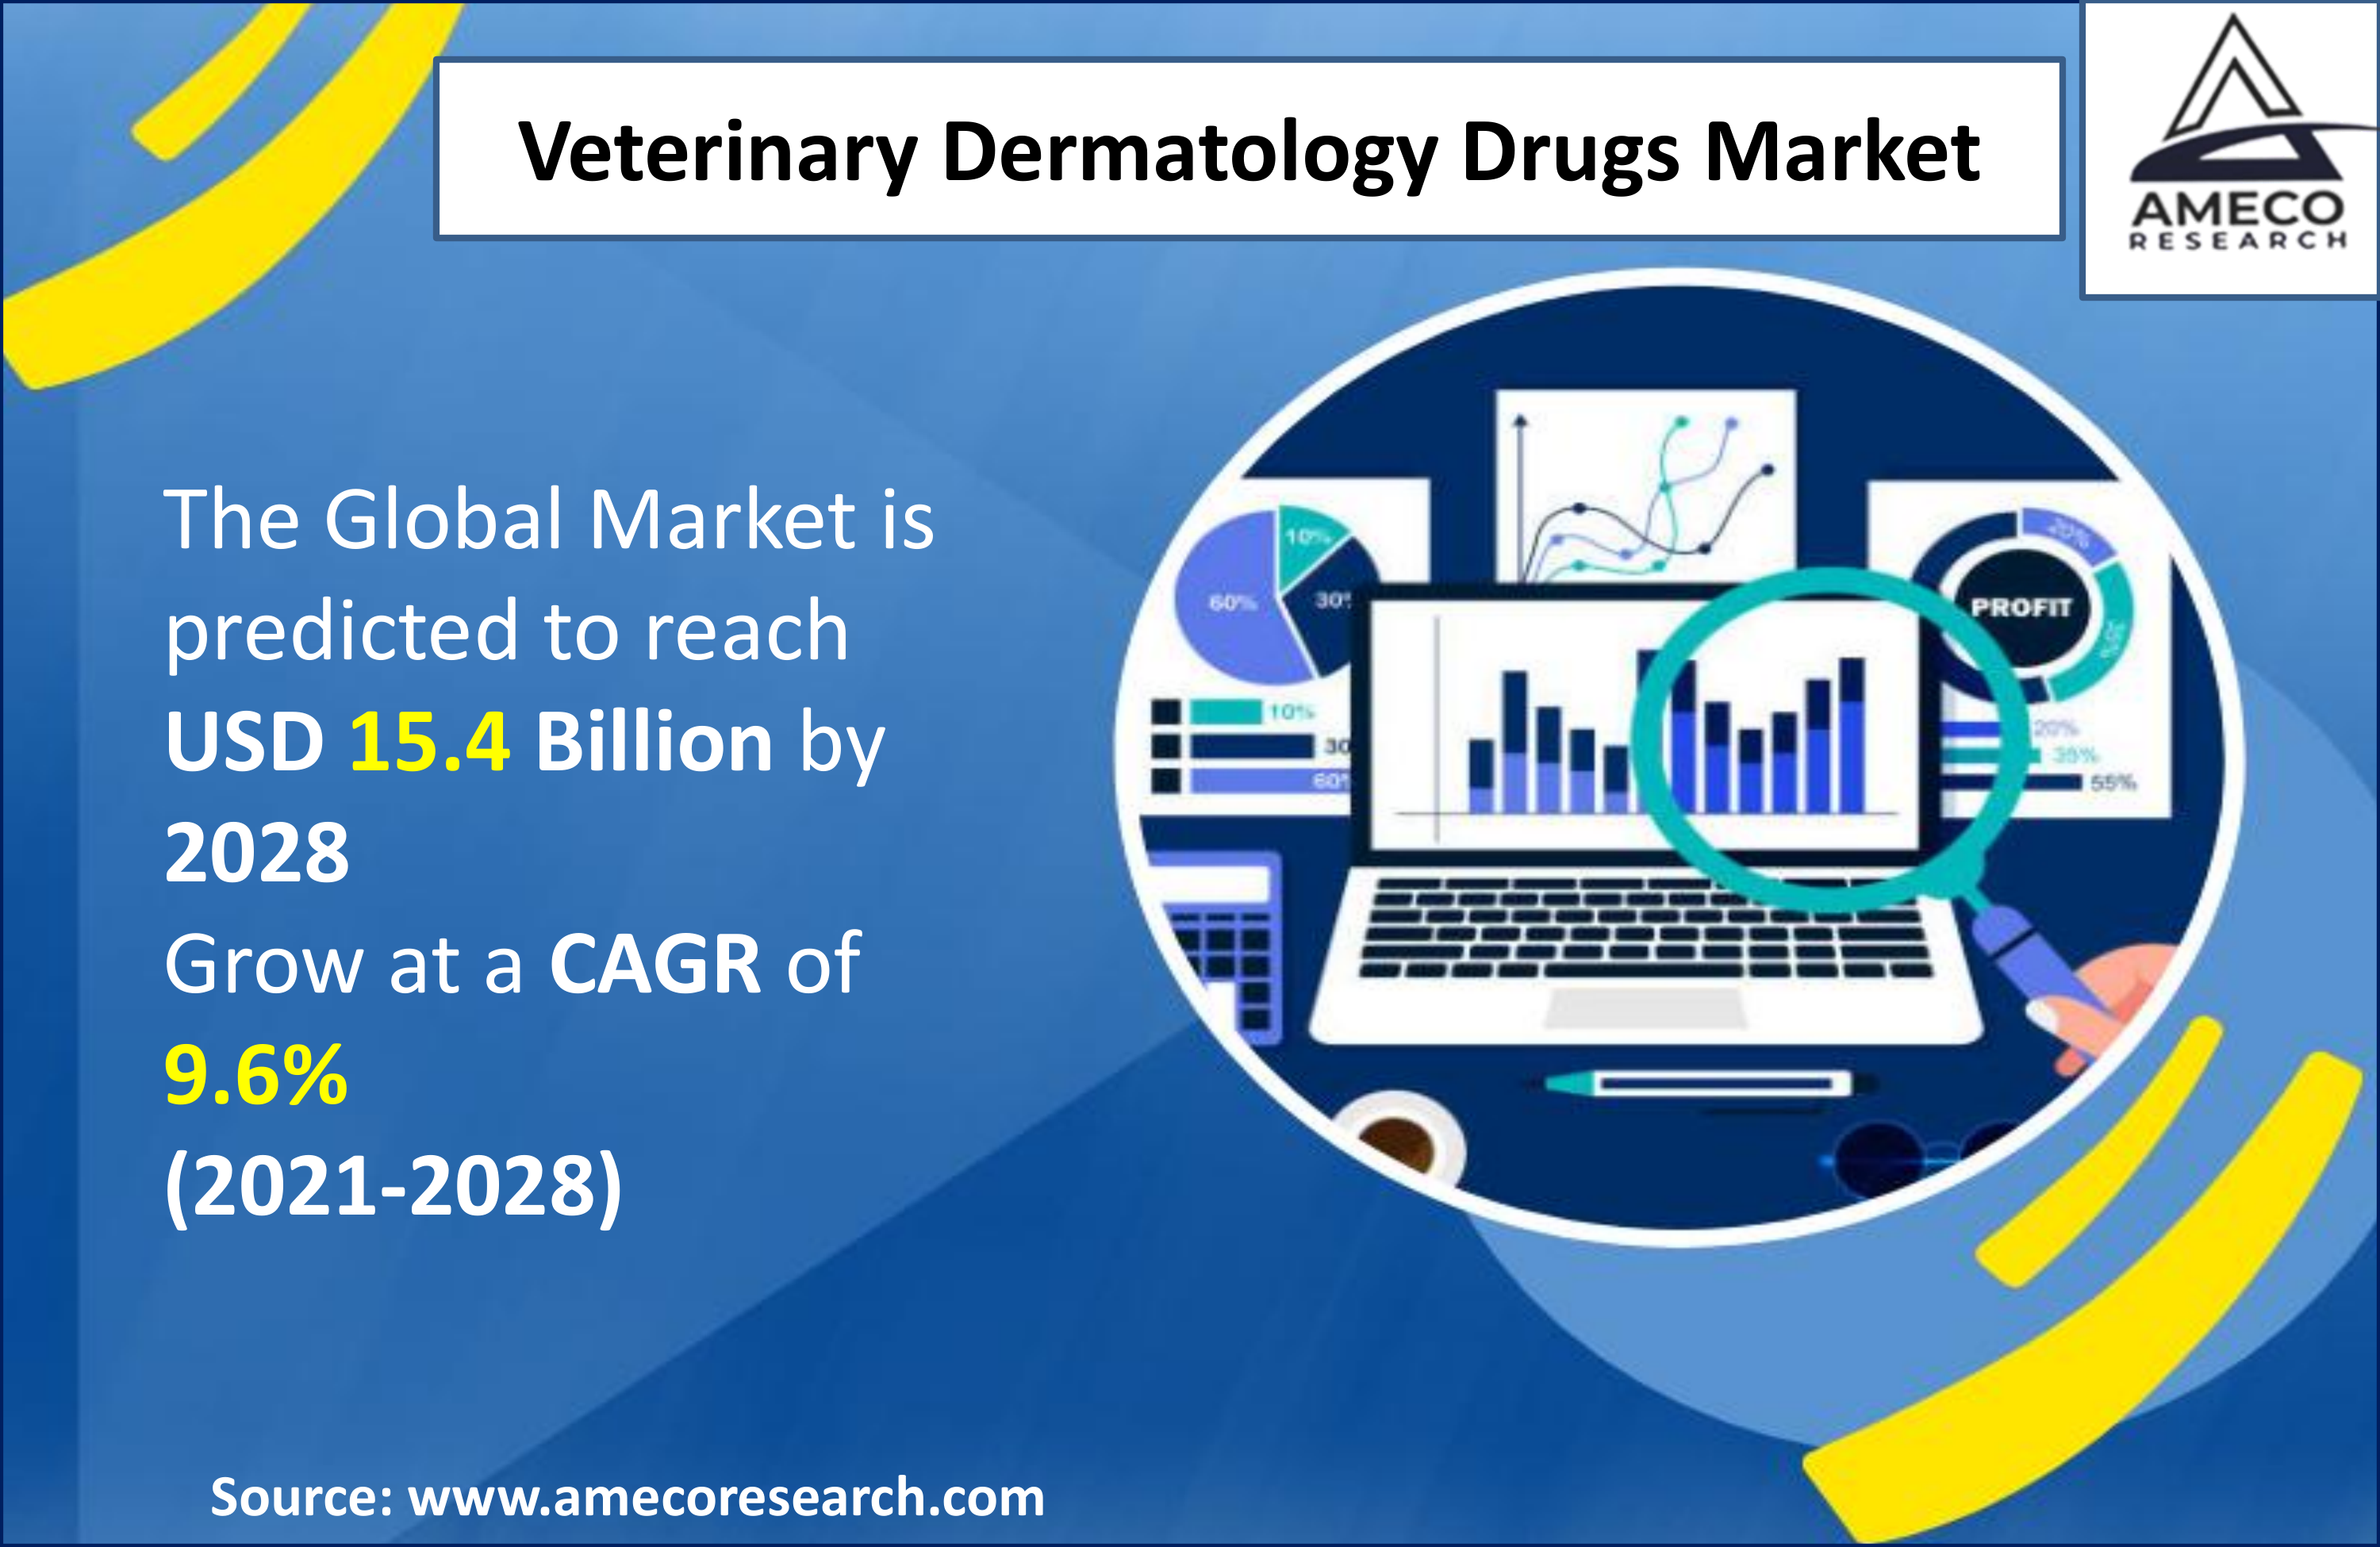 Veterinary Dermatology Drugs Market